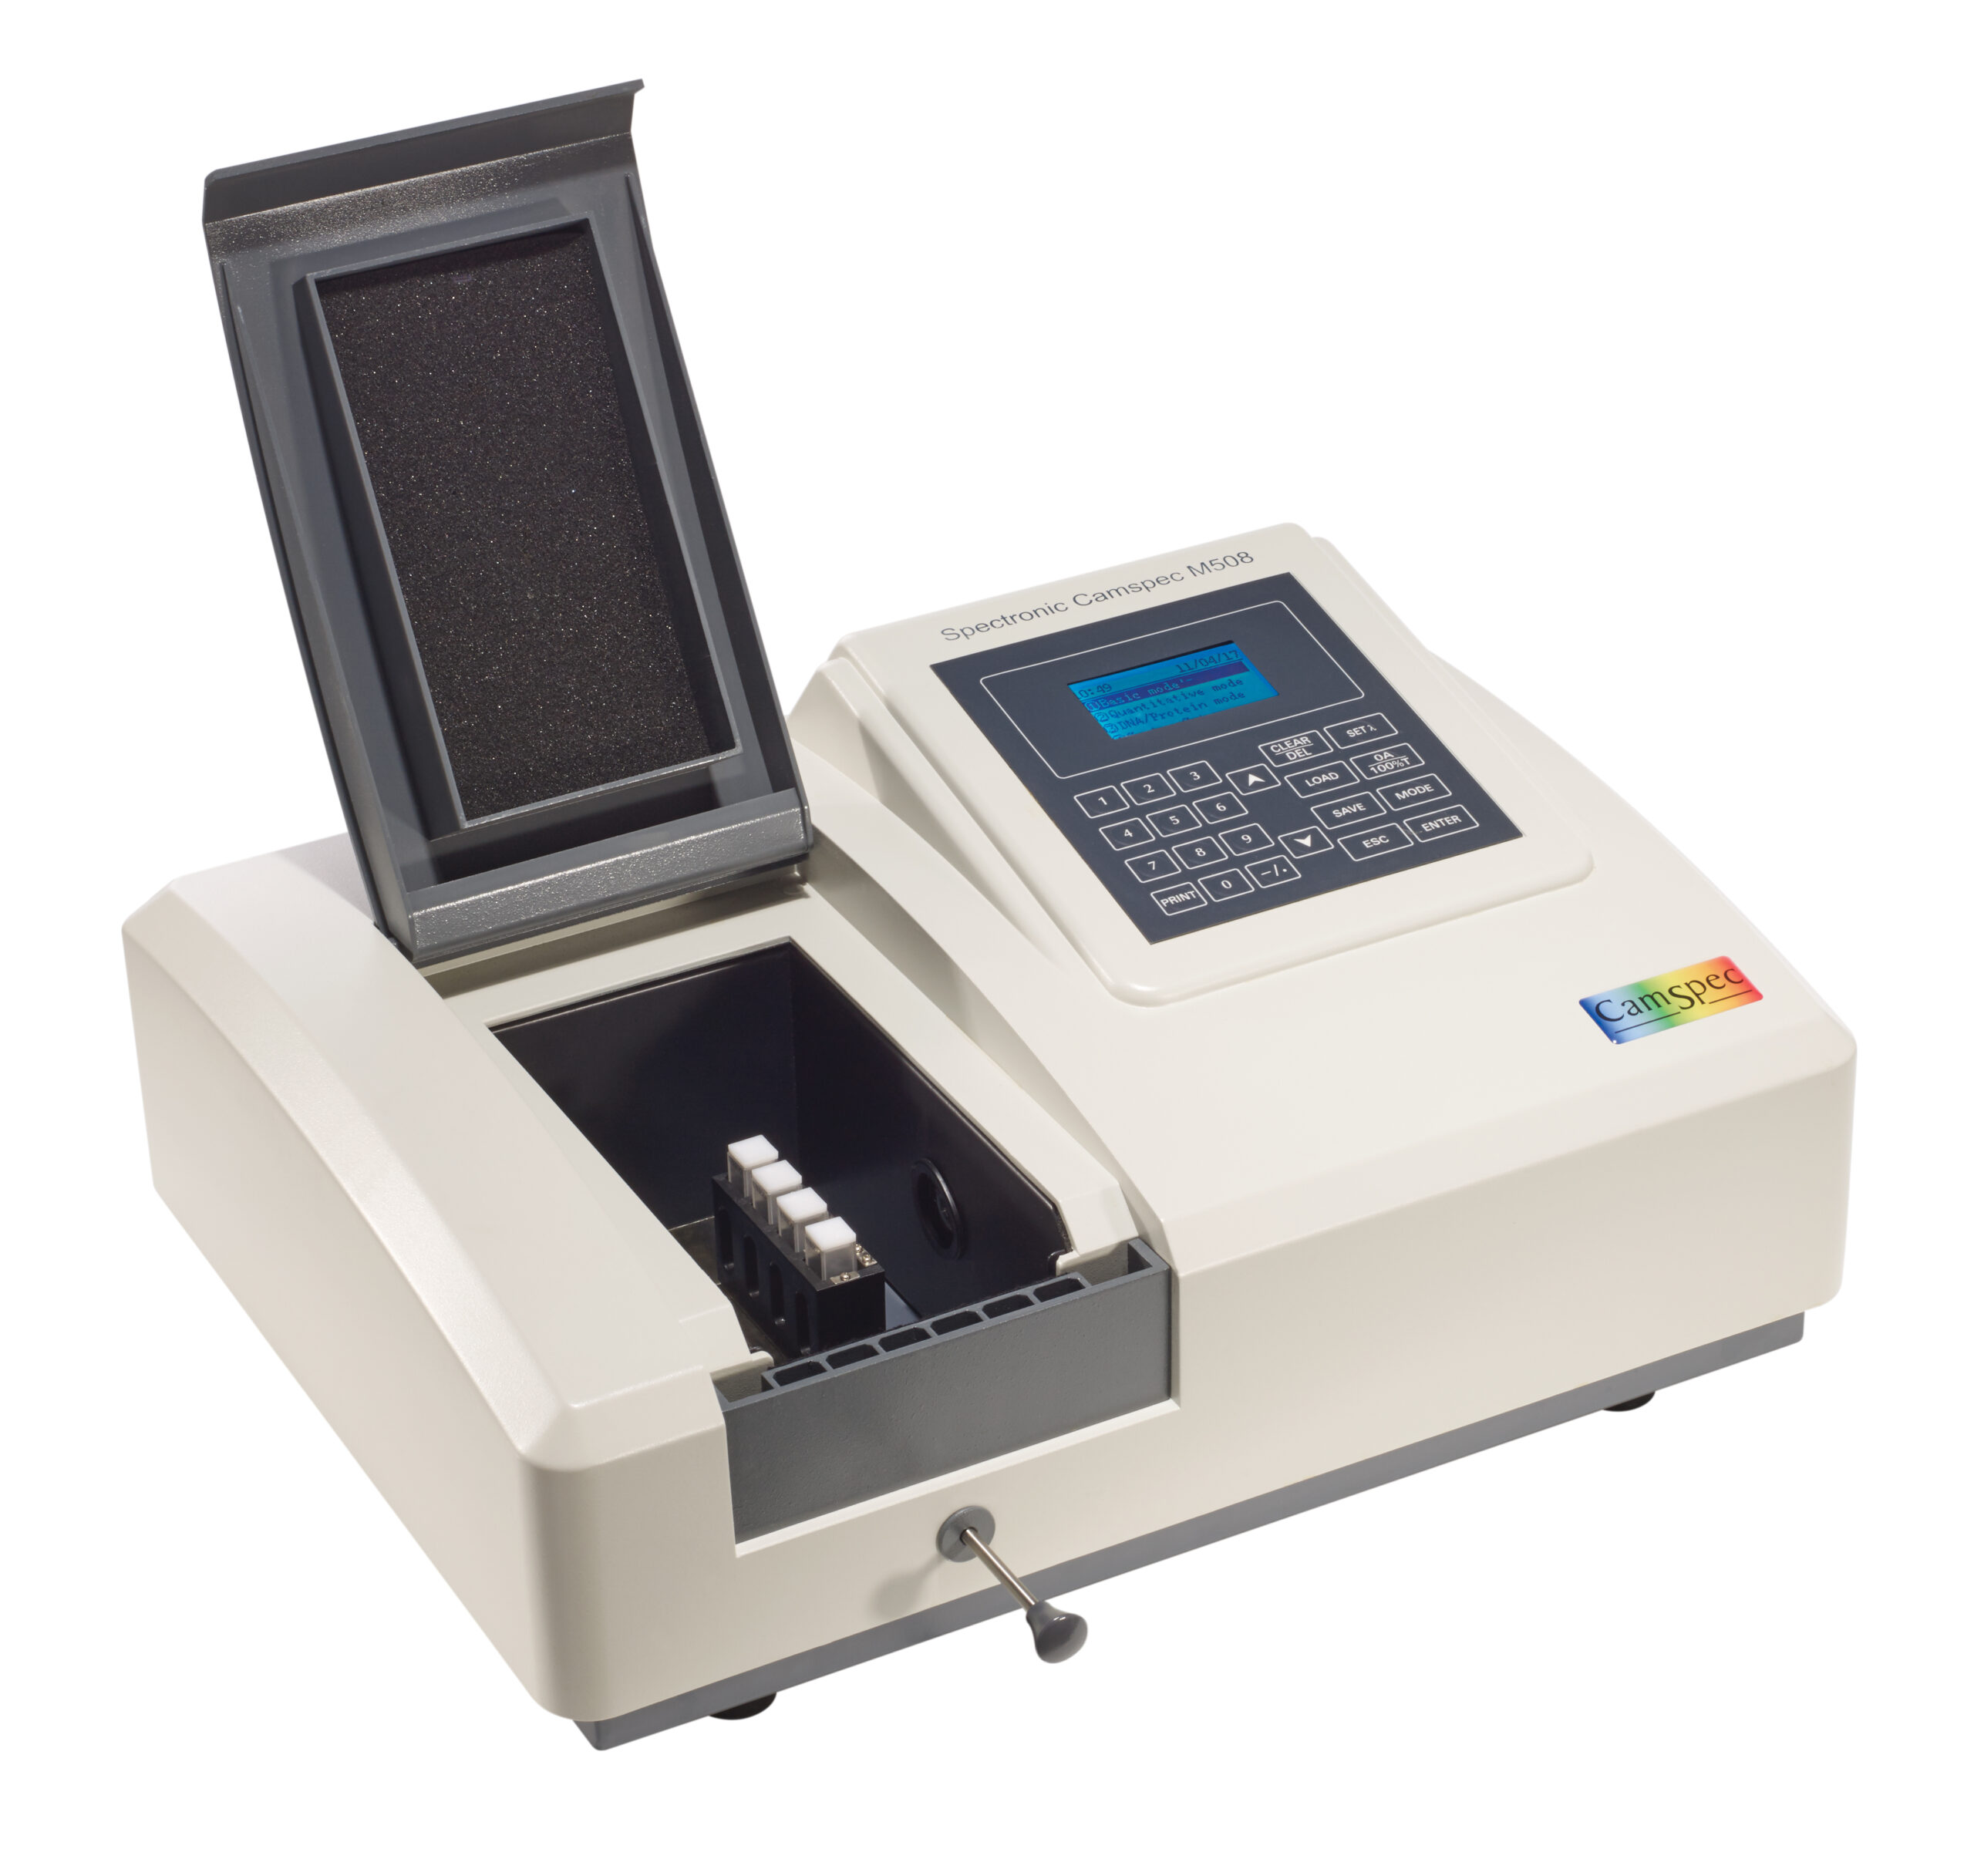 Camspec M508 Spectrophotometer 1